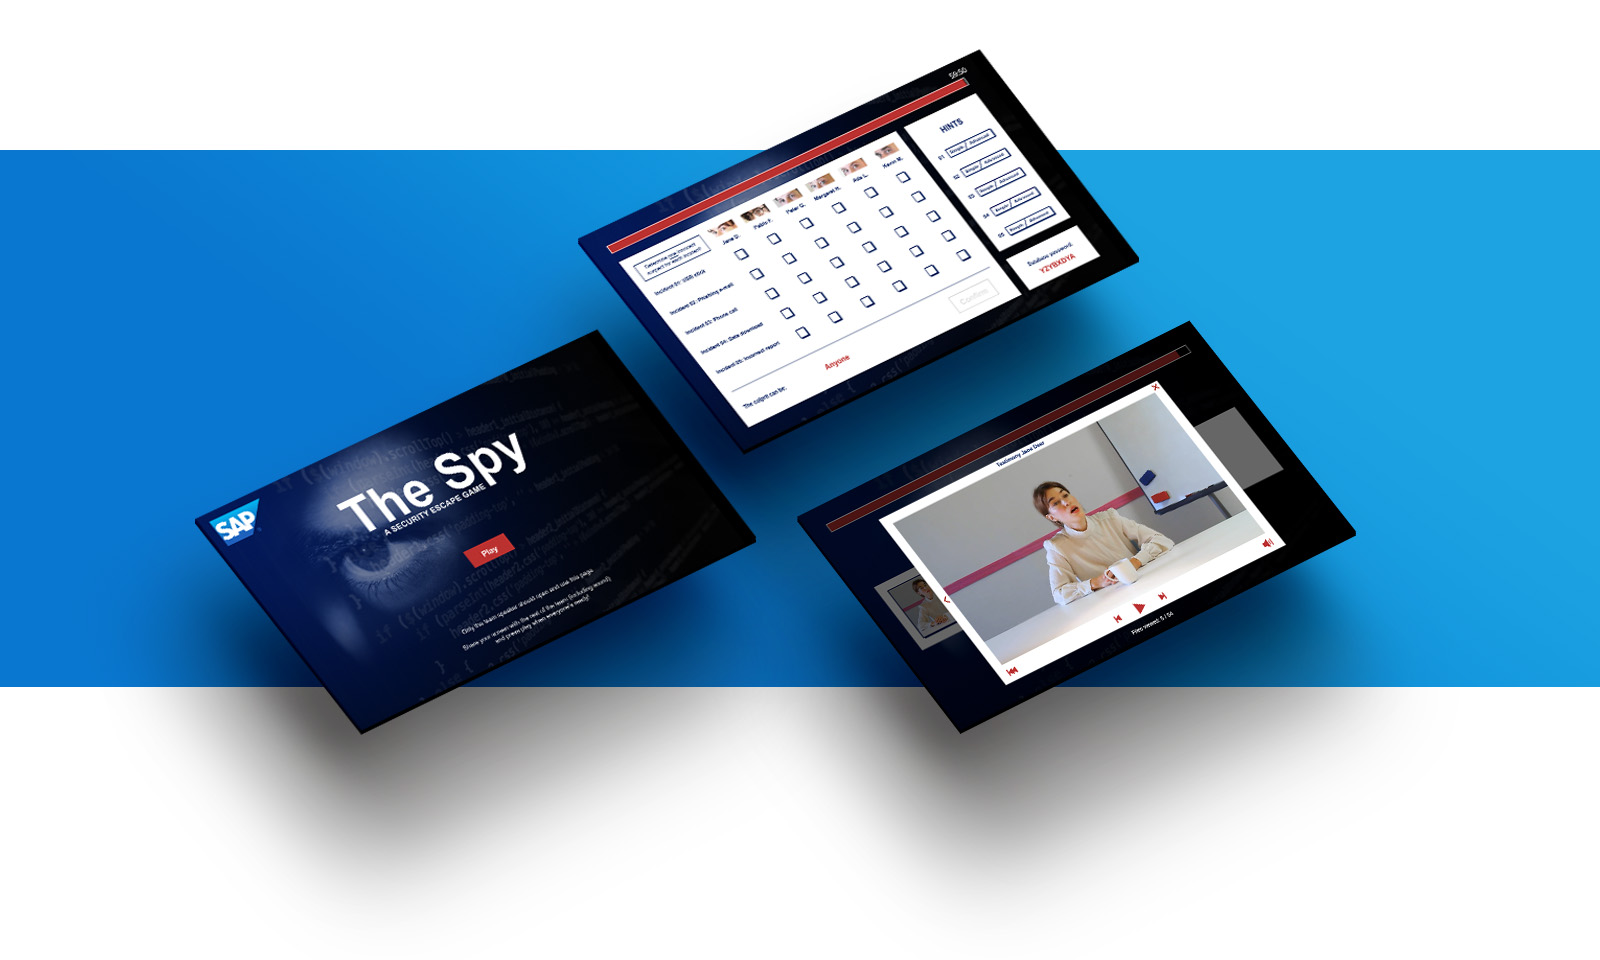 SAP "The Spy" - Beispielhafte Screenshots aus dem Digital Escape Game